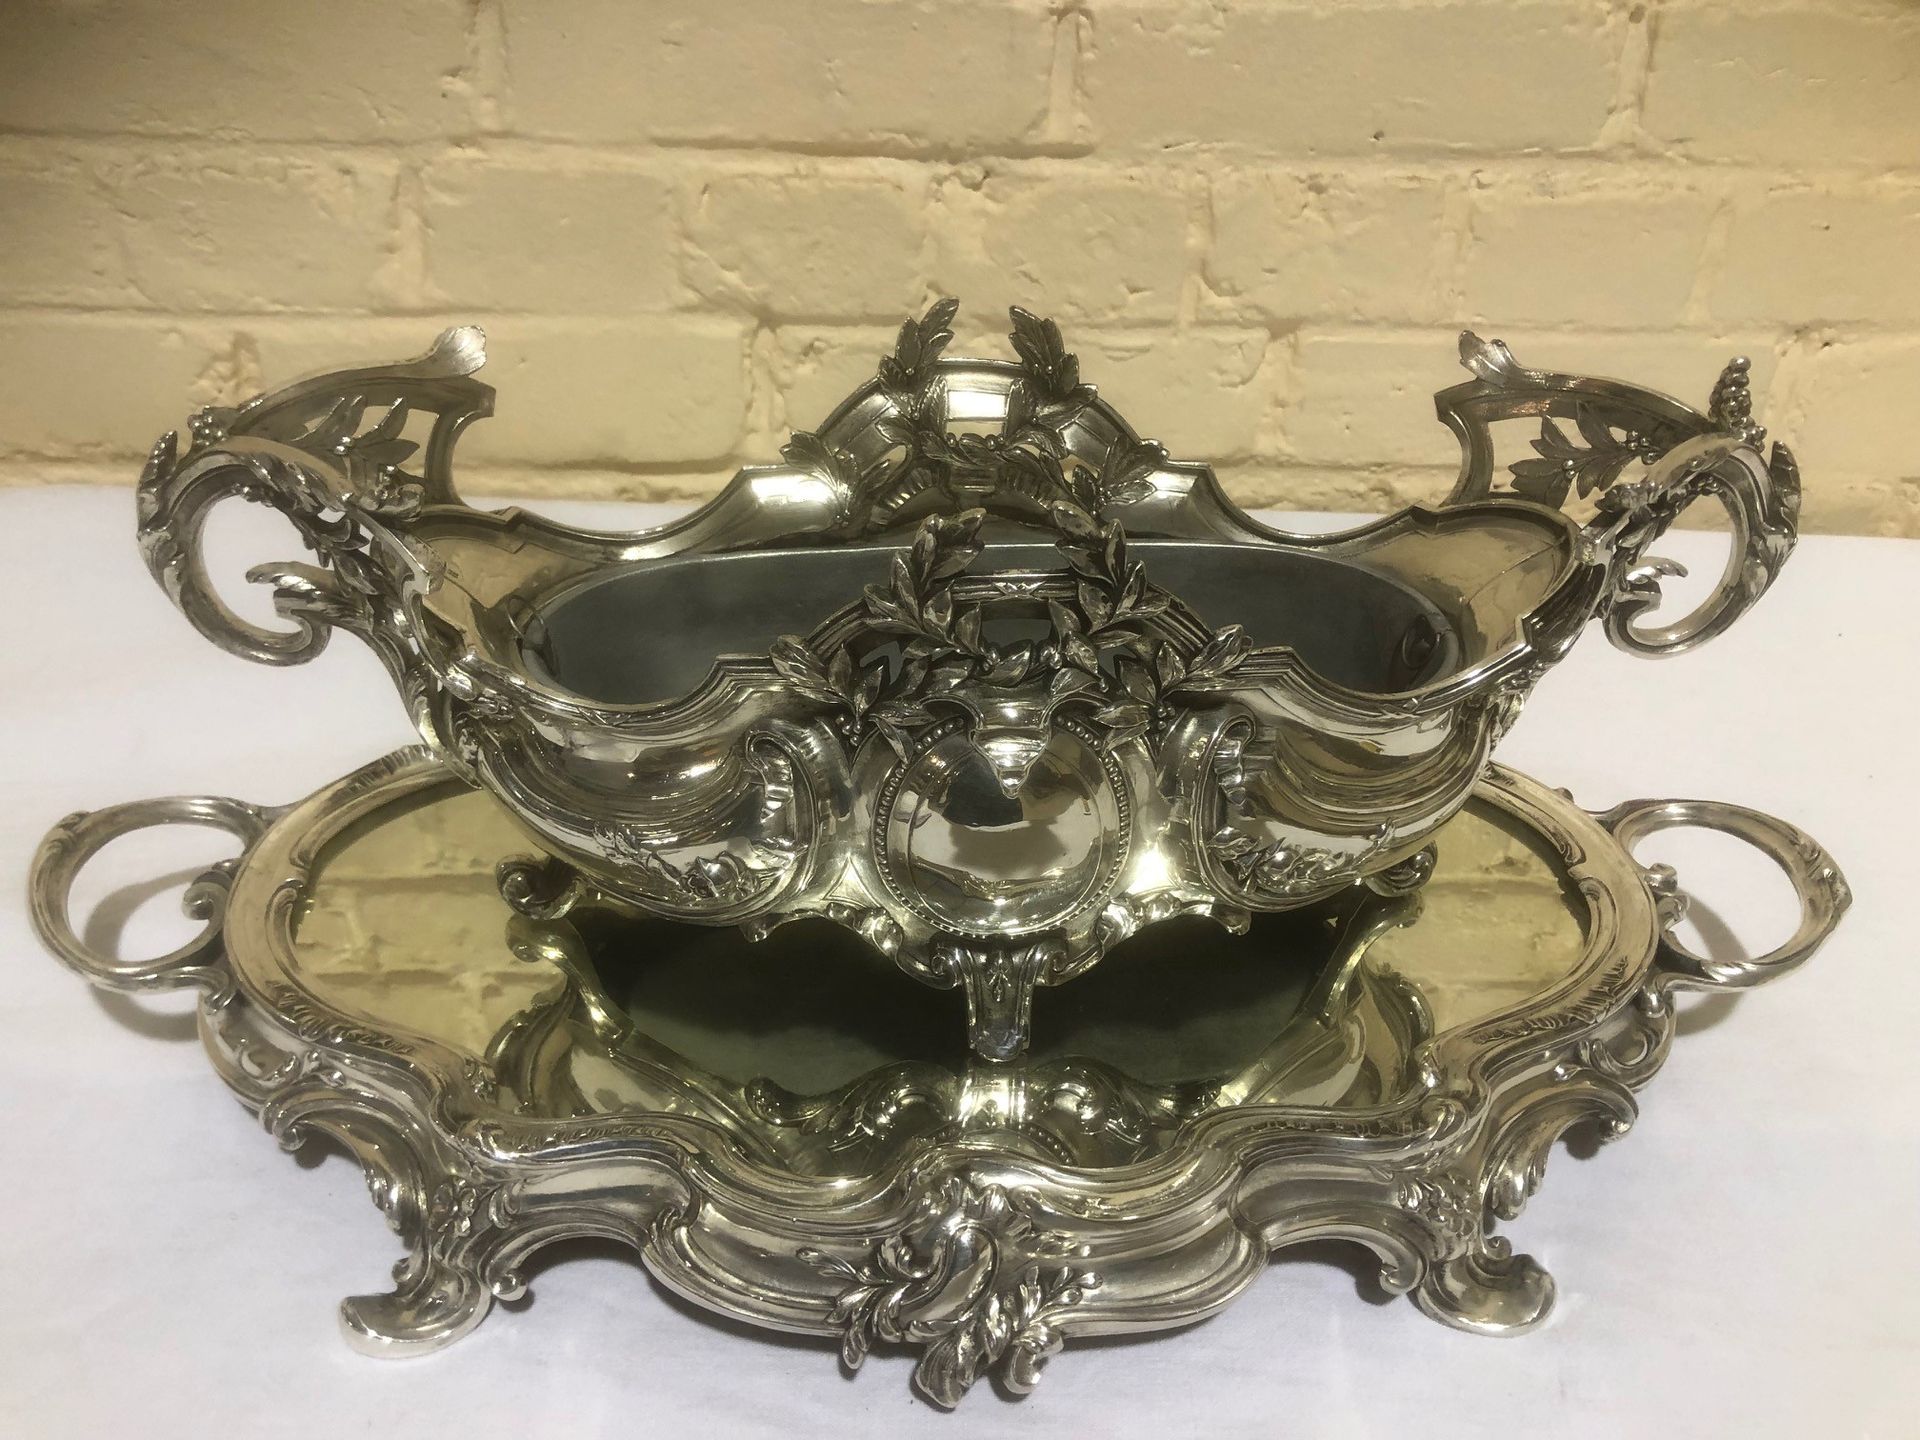 Null 镀银金属路易十五餐桌中央装饰品
由一个带有镜子的中心摆件组成，形成一个托盘，用于摆放带有罗盖尔装饰的四脚花盆
19世纪
21 x 53 x 29 厘米